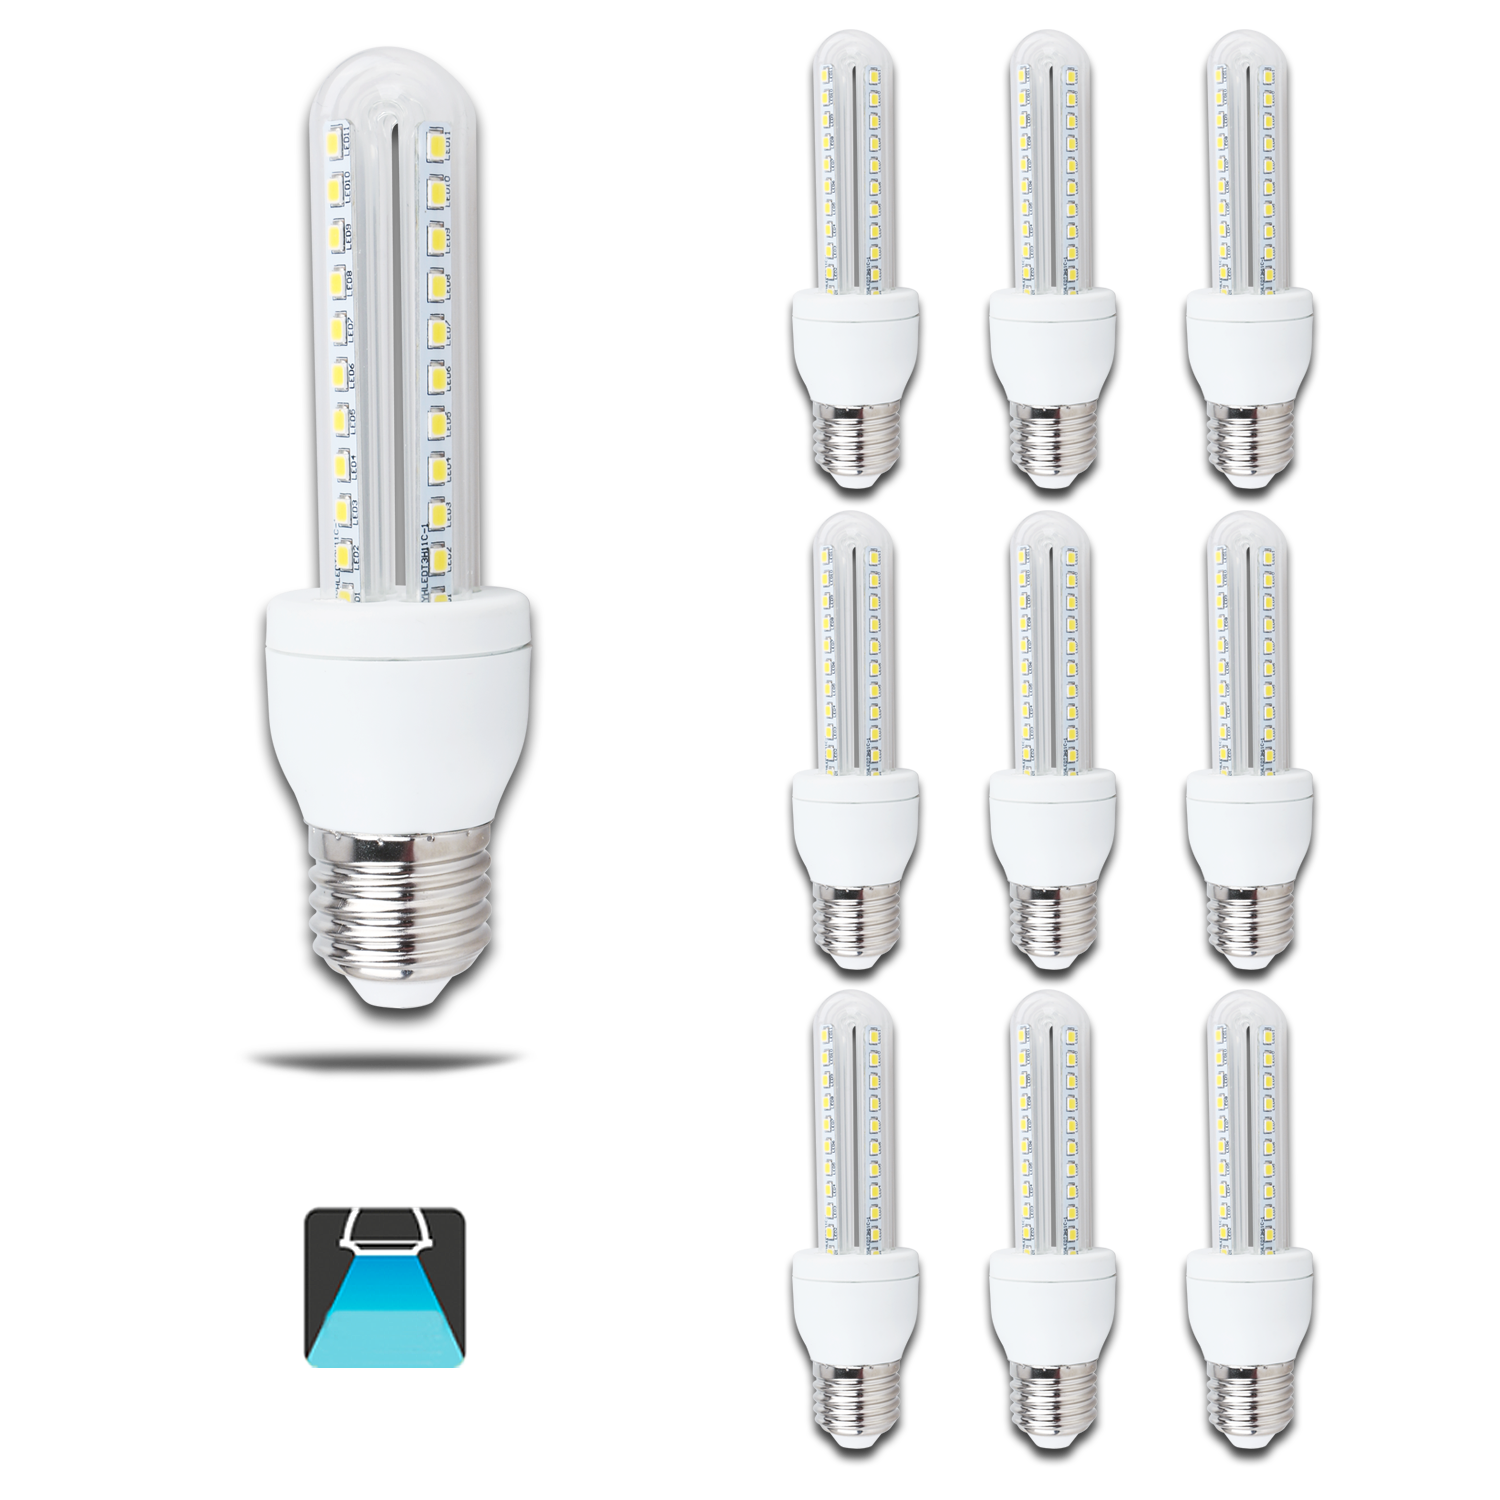 Aigostar - LED Lampadina B5 2U E27, 8W (equivalenti a 65W), 640 lumen, Luce Bianca 6400K，Pacco da 10.